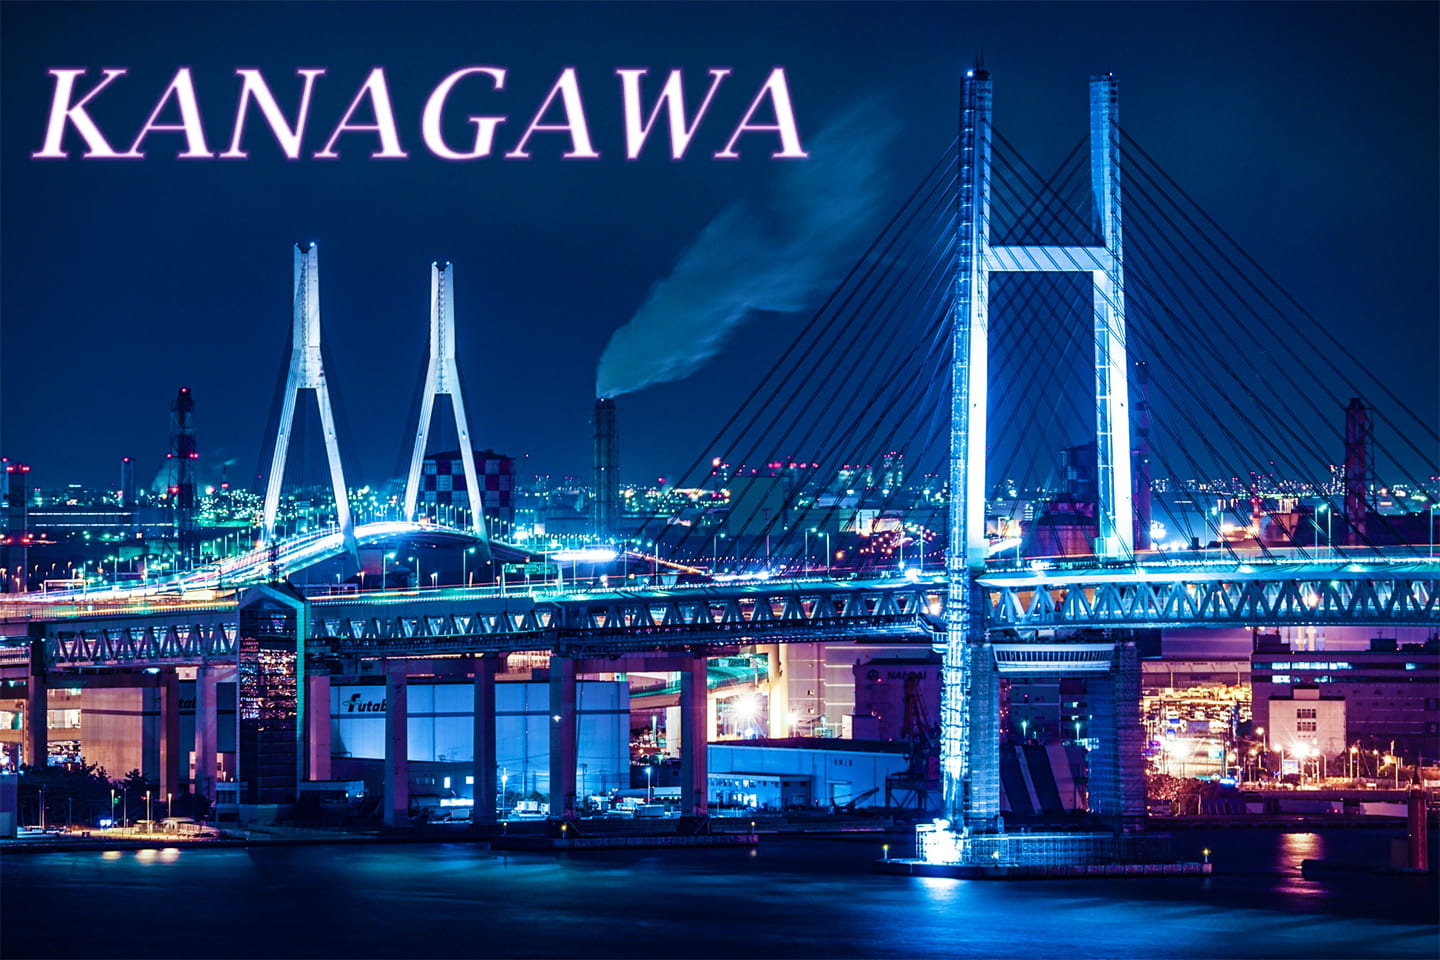 Basic Information about Kanagawa